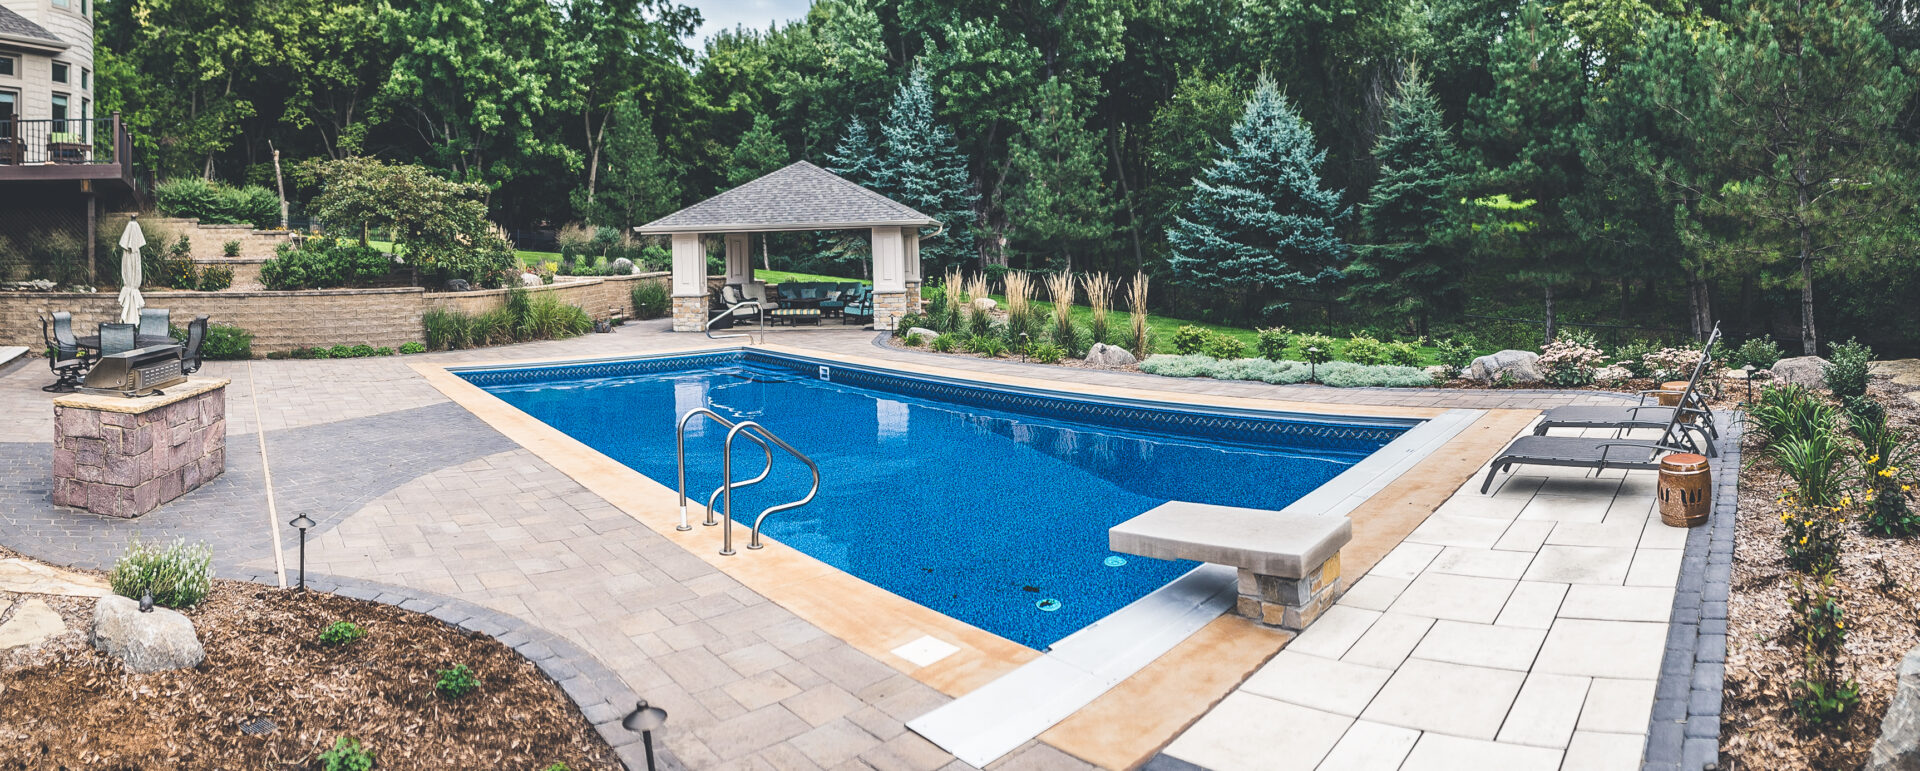 custom backyard pool with starting block